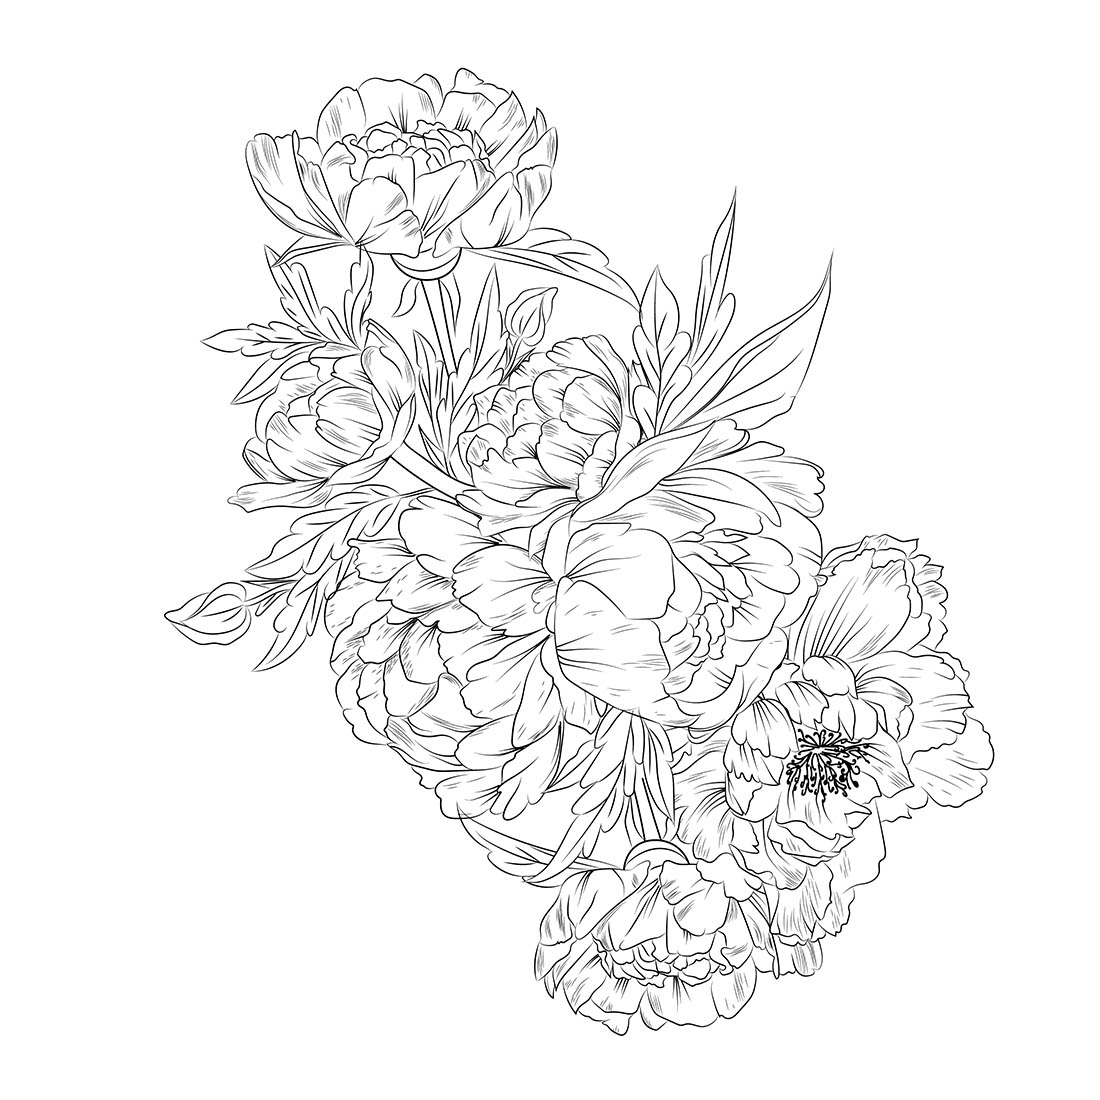 peony line drawing tattoo, linework peony tattoo design, scientific peony botanical illustration, Peony flower sketch art preview image.